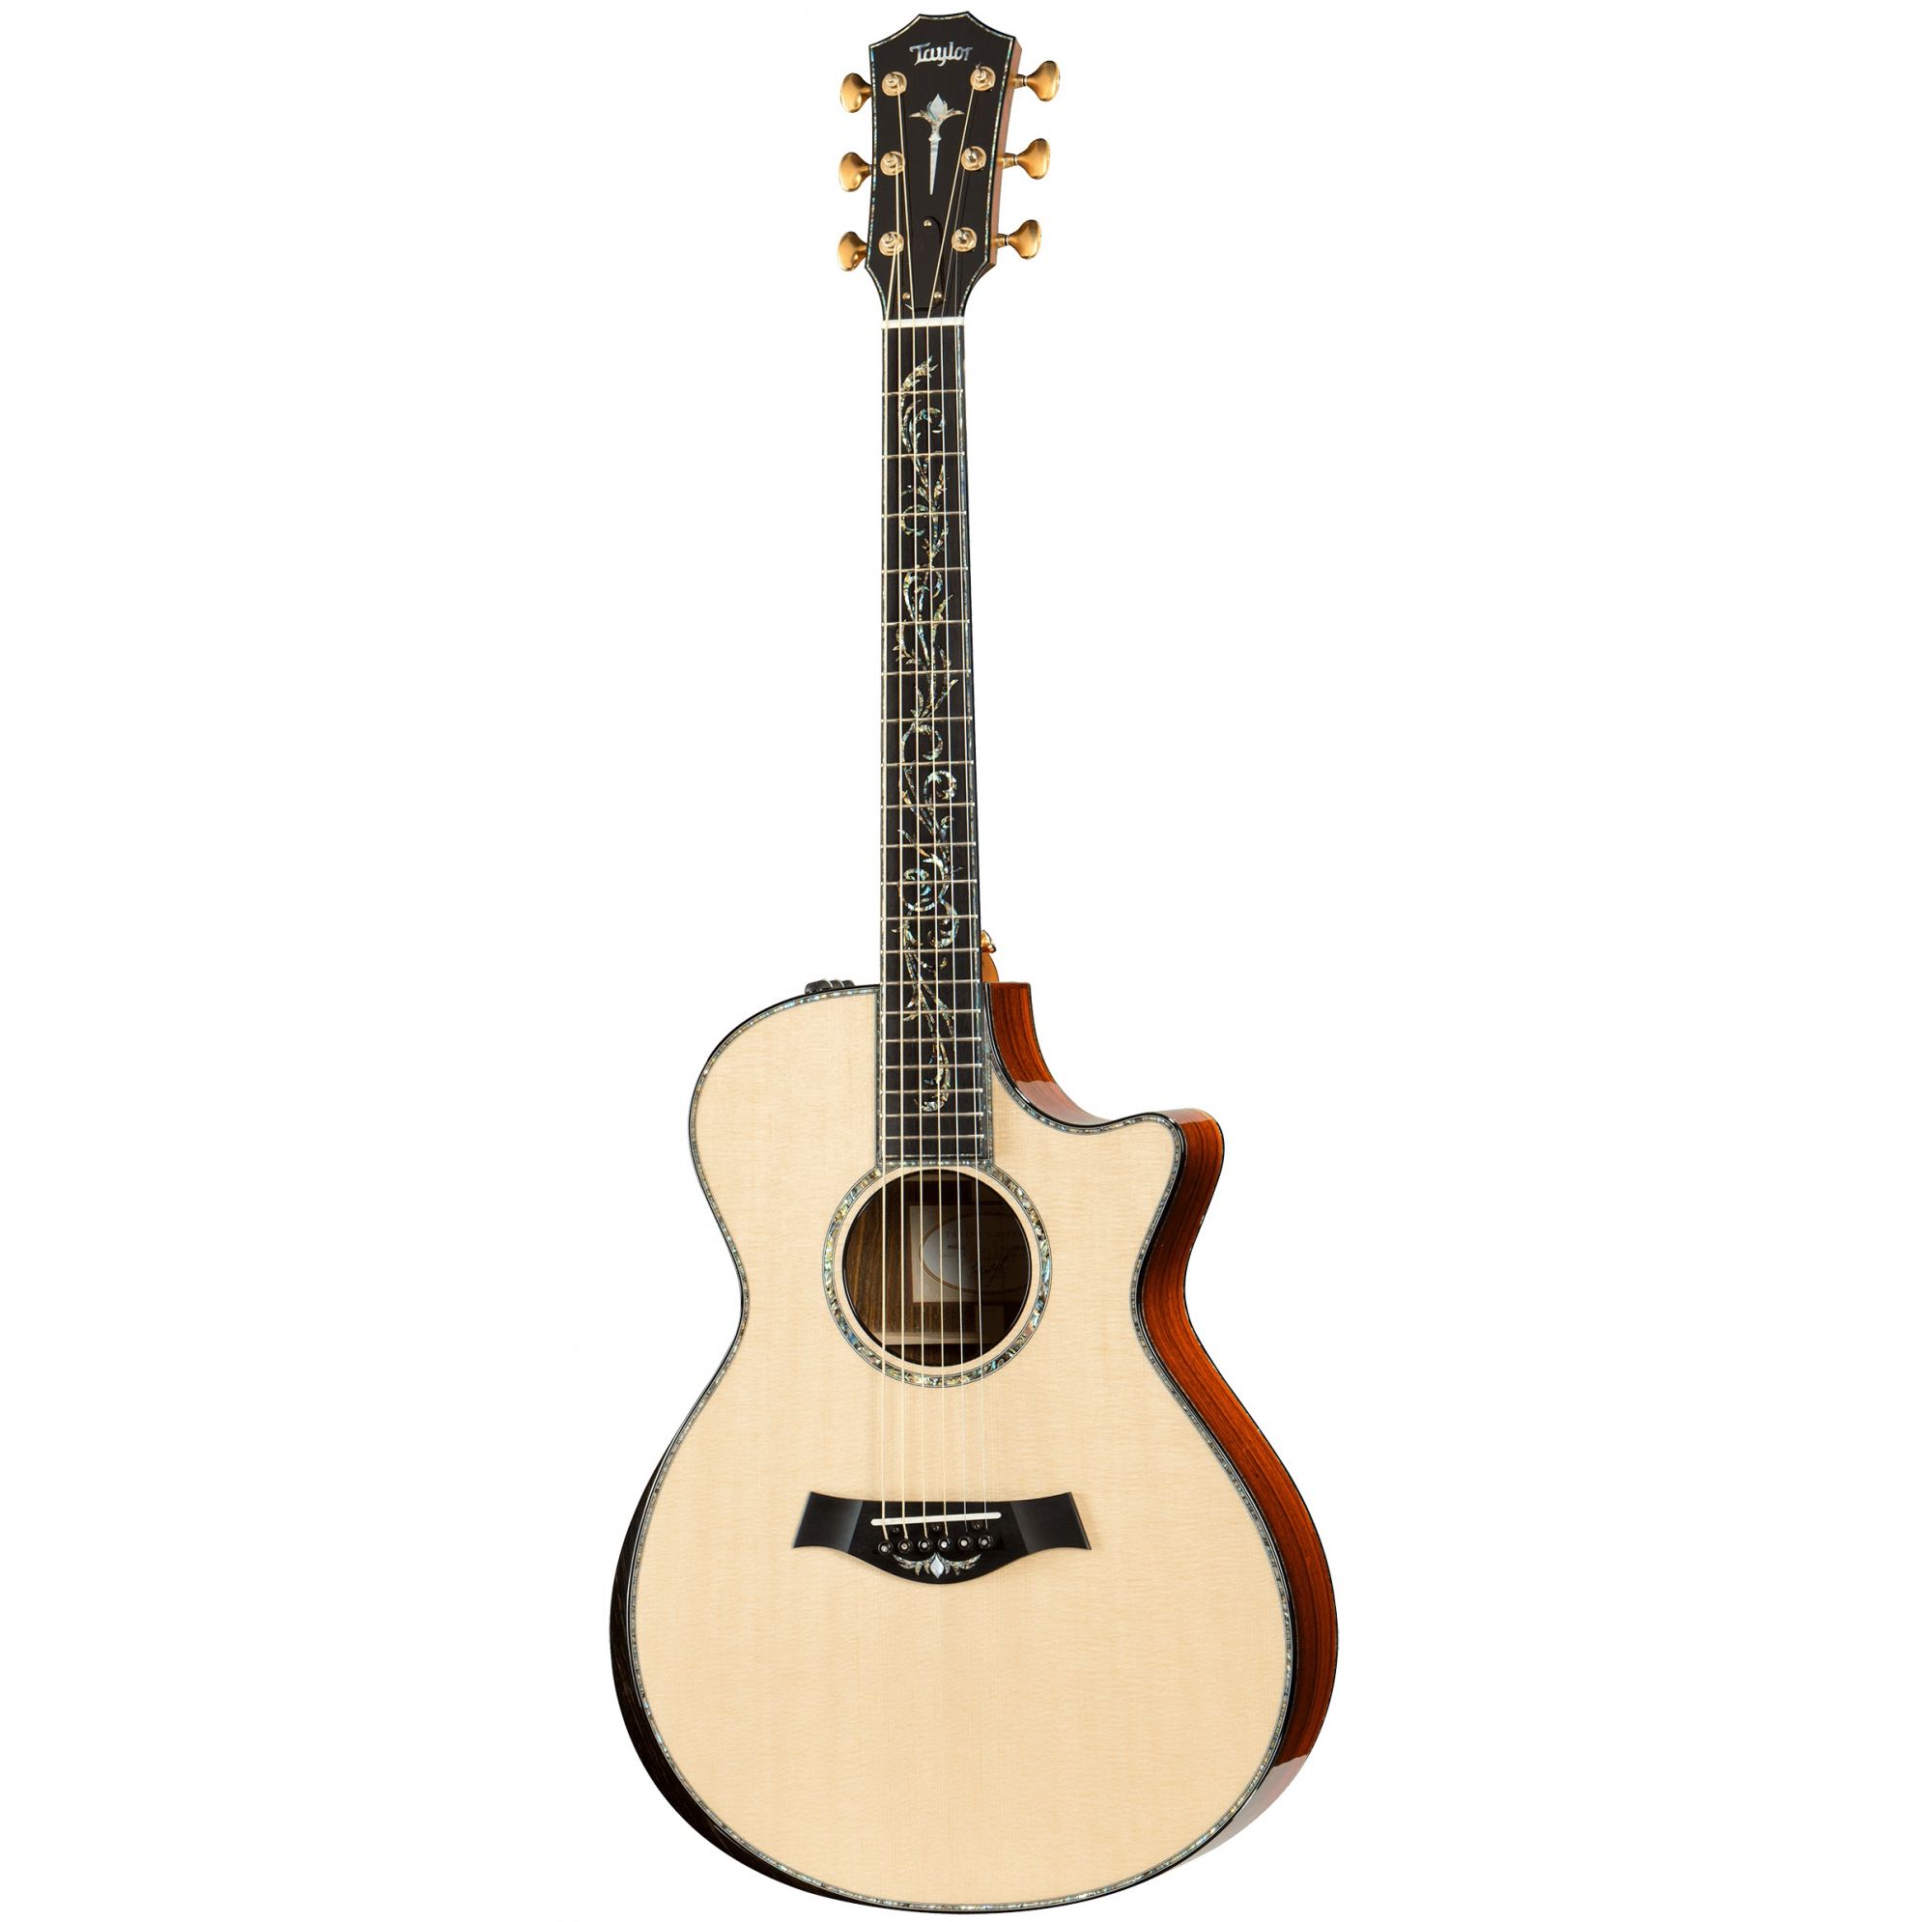 Taylor PS12ce Presentation Series Cocobolo/Spruce Grand Concert Acoustic-Electric Guitar